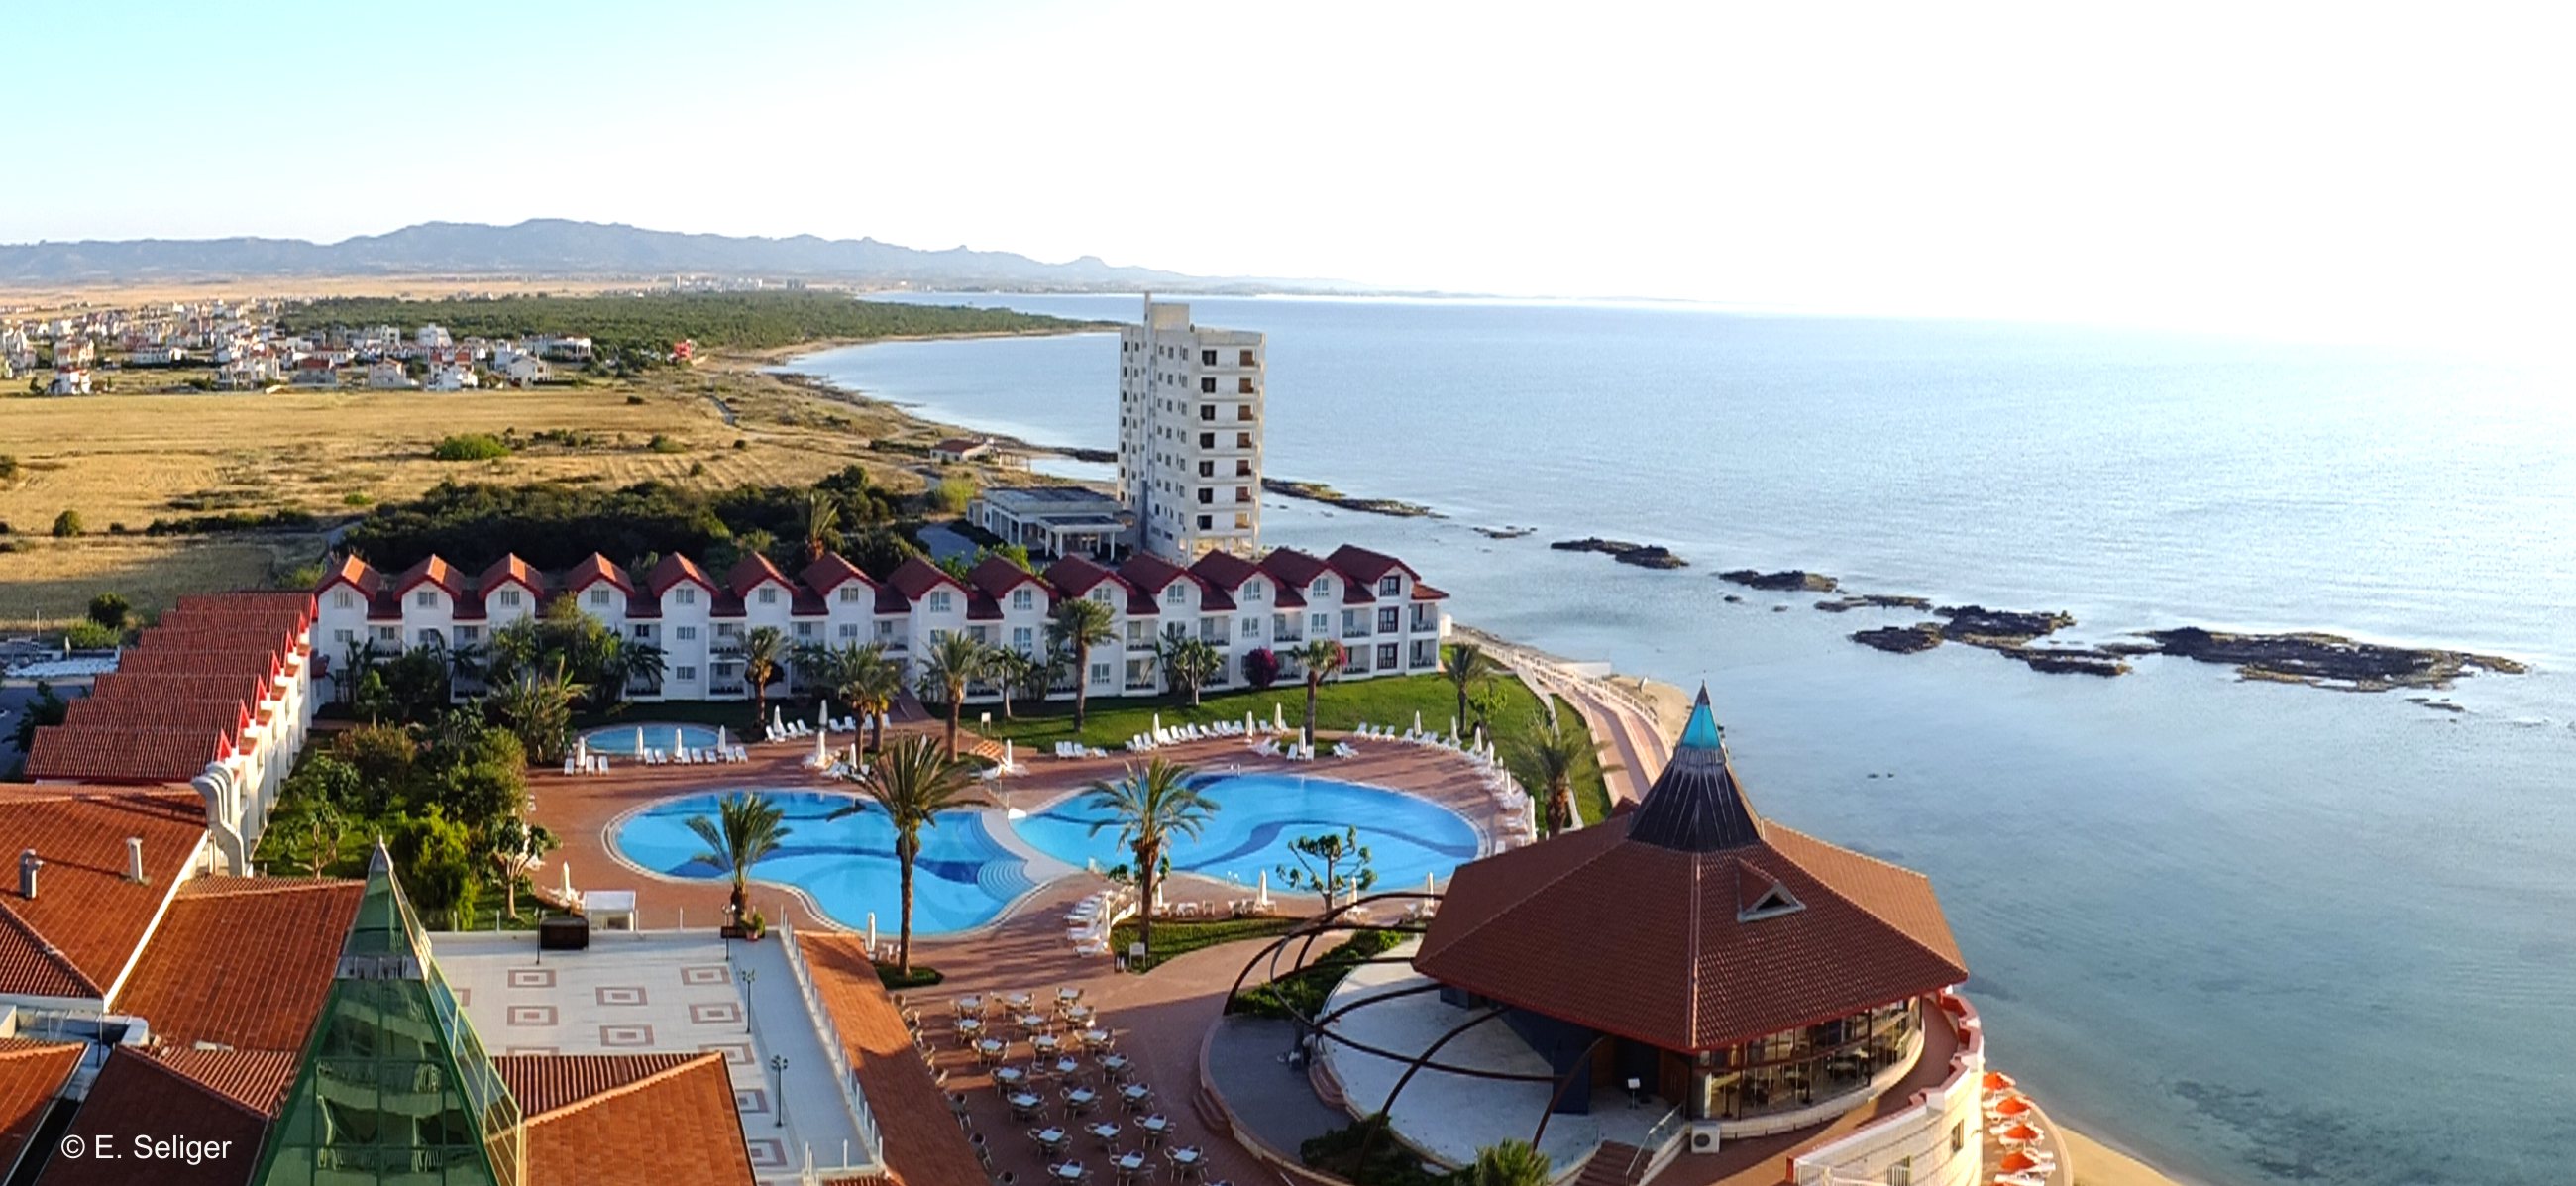 Blick afu das Areal des Hotels Salamis Bay - Lupe Reisen